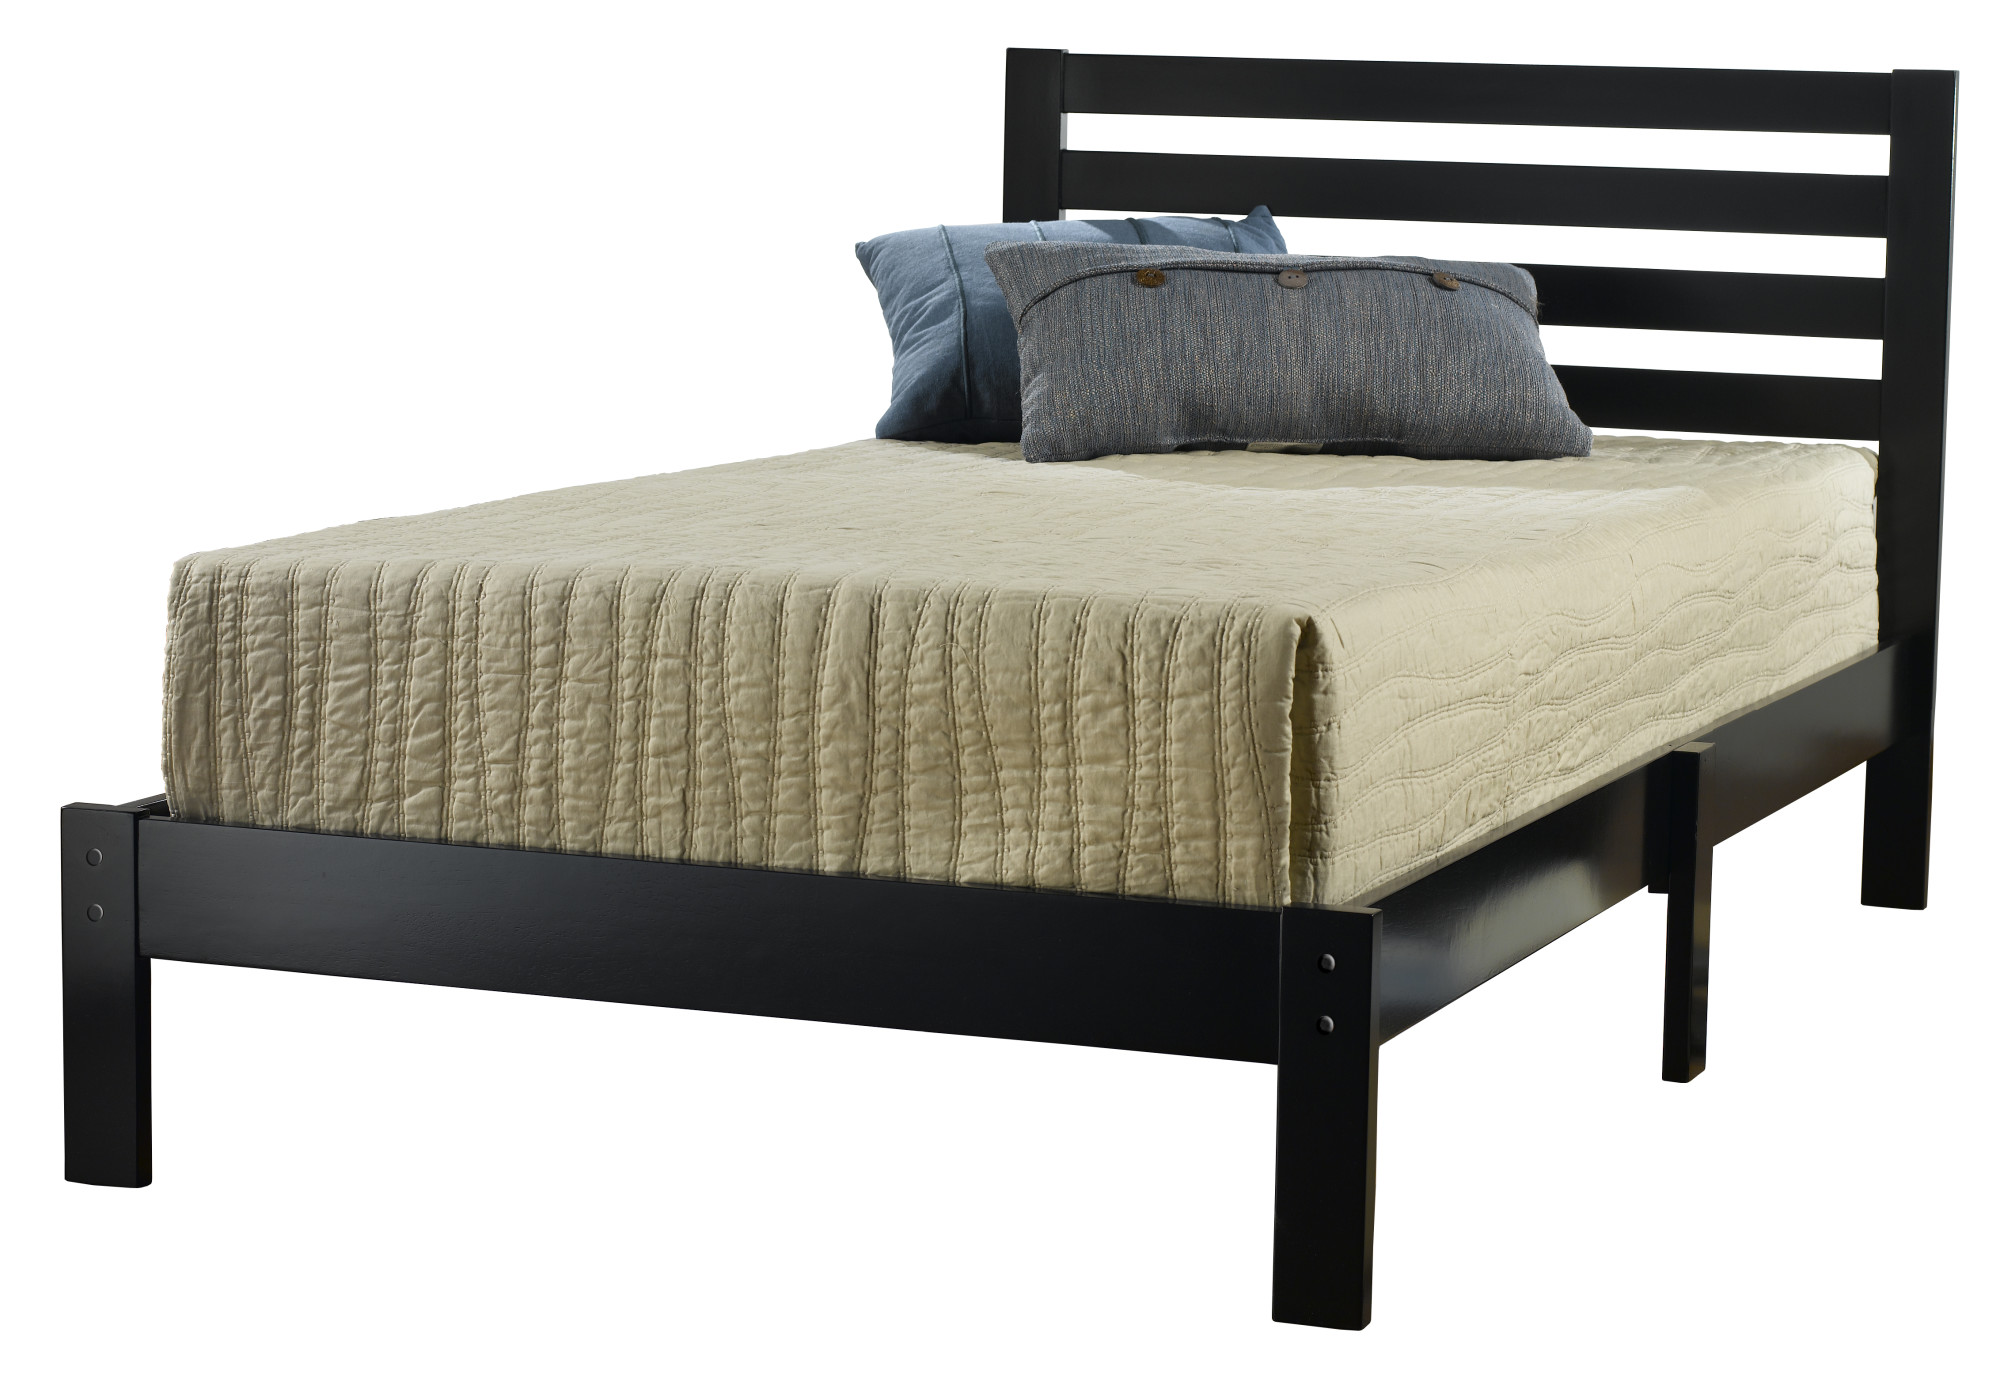 Hillsdale Furniture Aiden Low Profile Ladder Back Wood Platform Twin Bed, Black - image 3 of 6